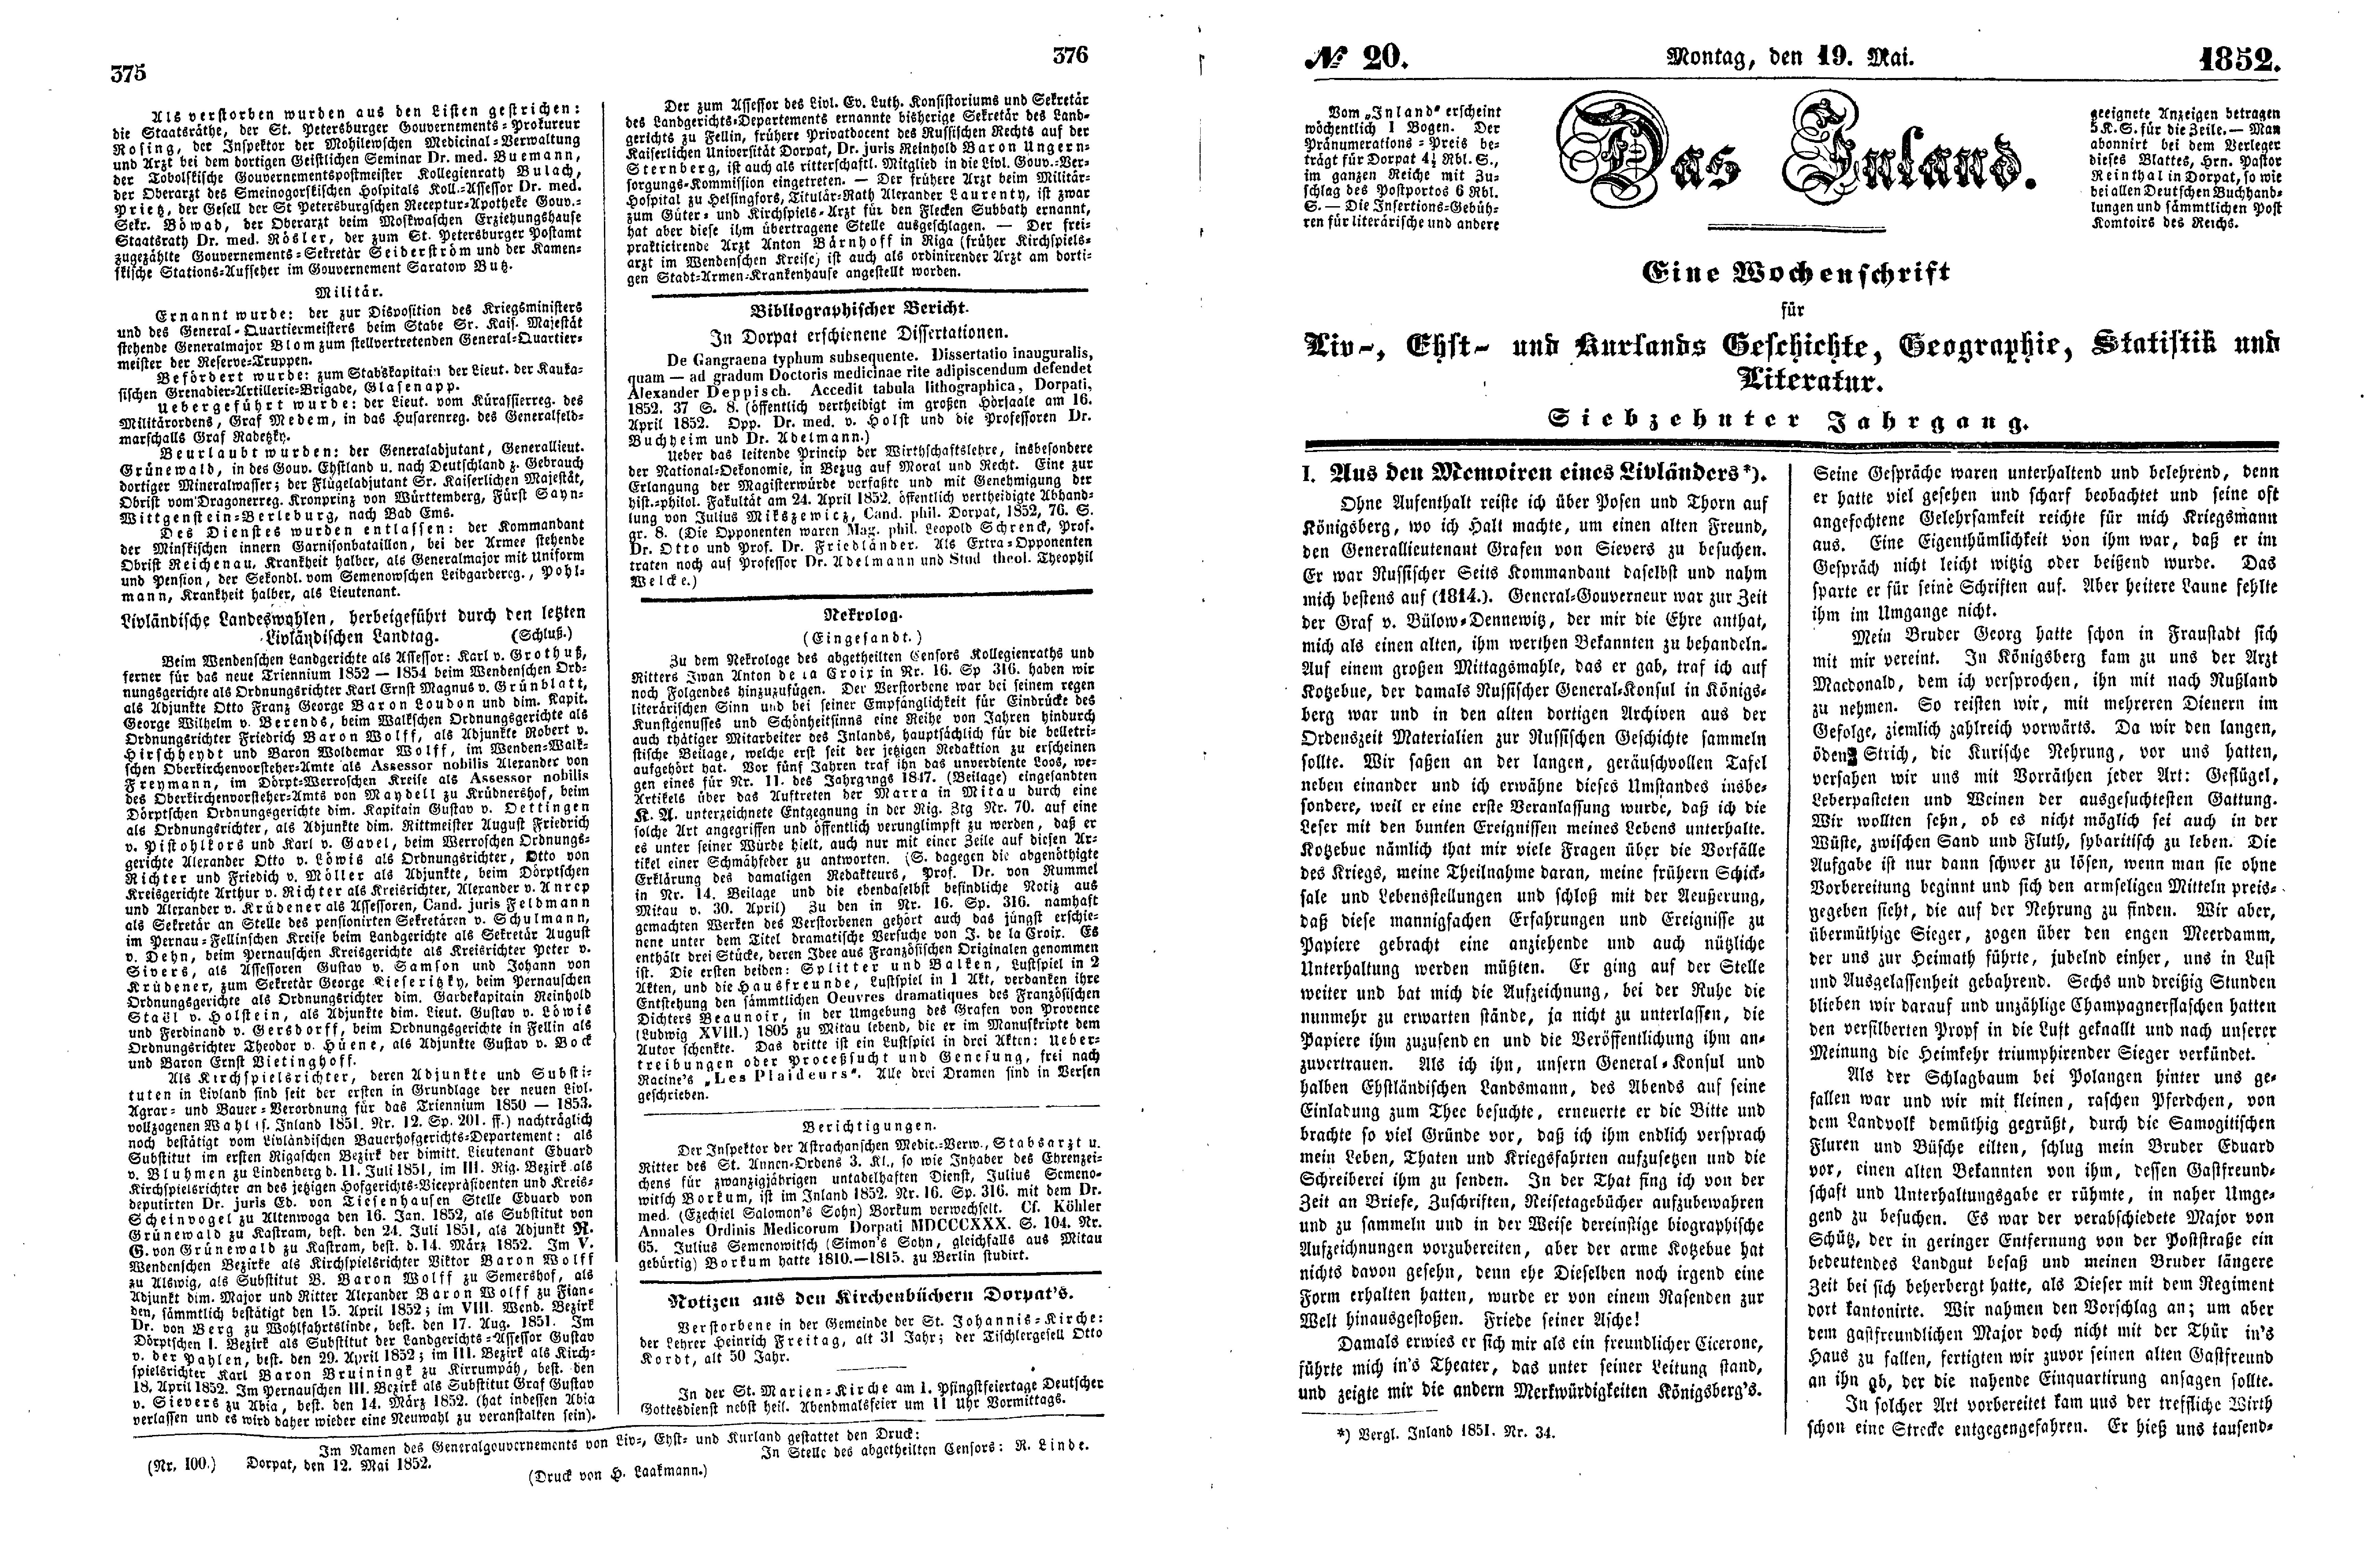 Das Inland [17] (1852) | 98. (375-378) Main body of text